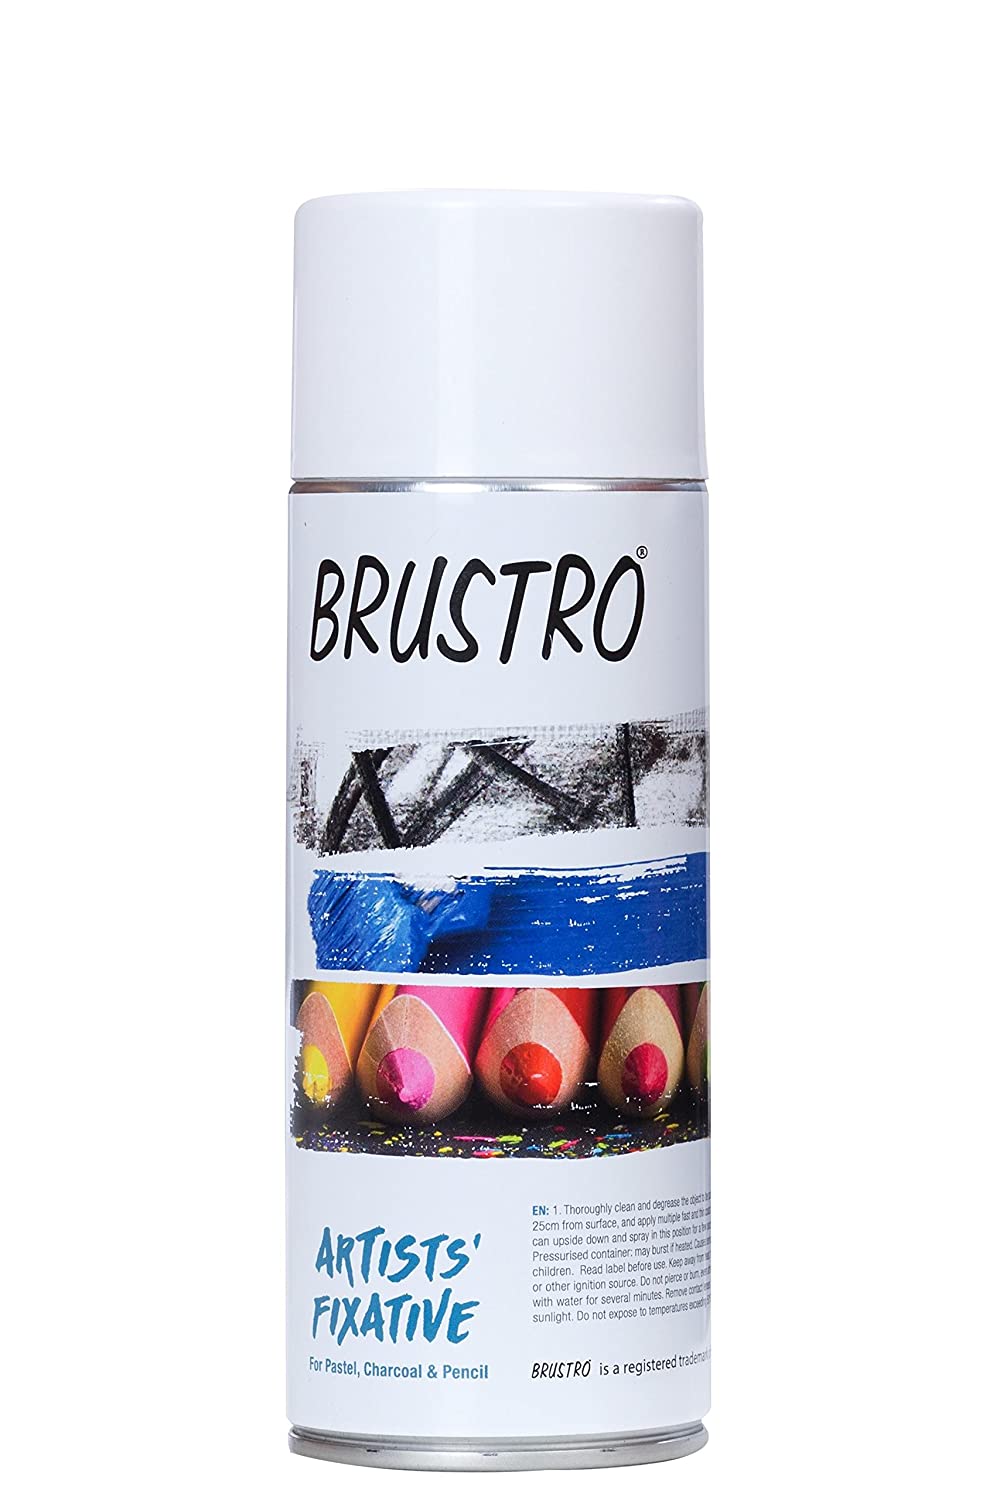 Brustro Artists Fixative 400 ml Spray Can